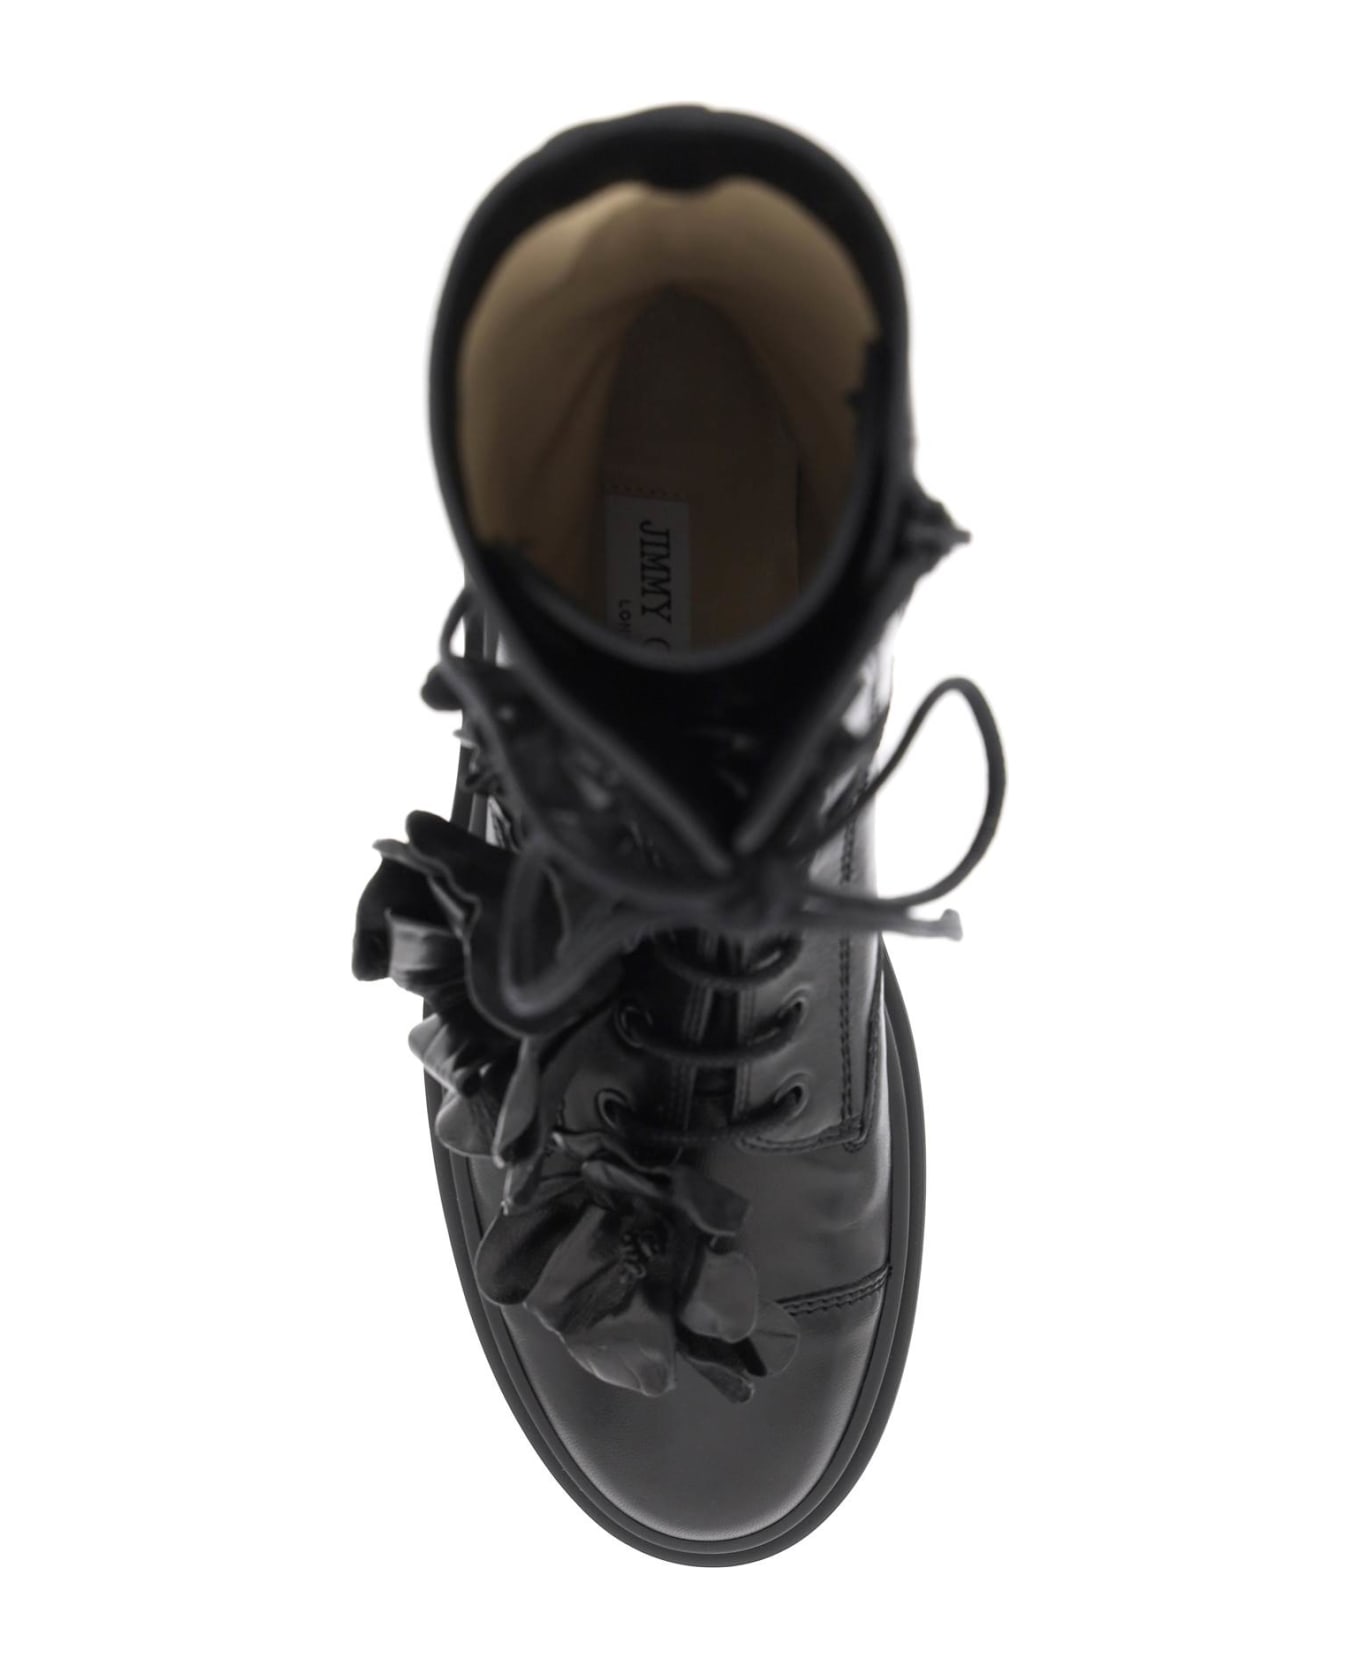 Jimmy Choo Nari Flowers Flat Combat Boots - BLACK (Black) ブーツ